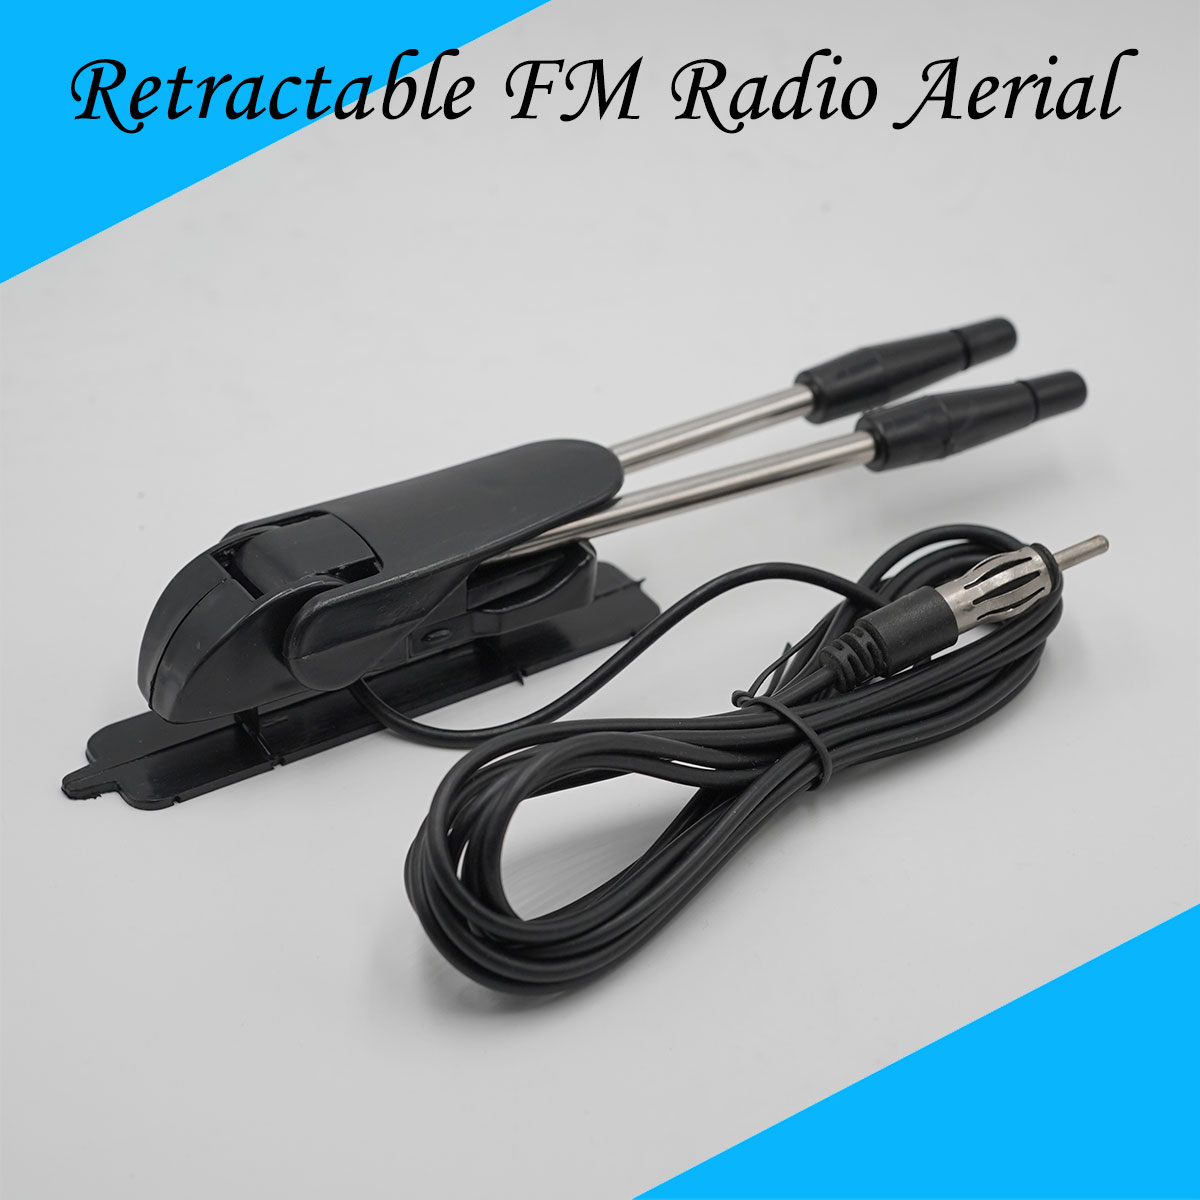 CARAVAN/MOTORHOMEOUTDOORS COMPACT RETRACTABLE FM RADIO AERIAL WITH 2.5M LINE